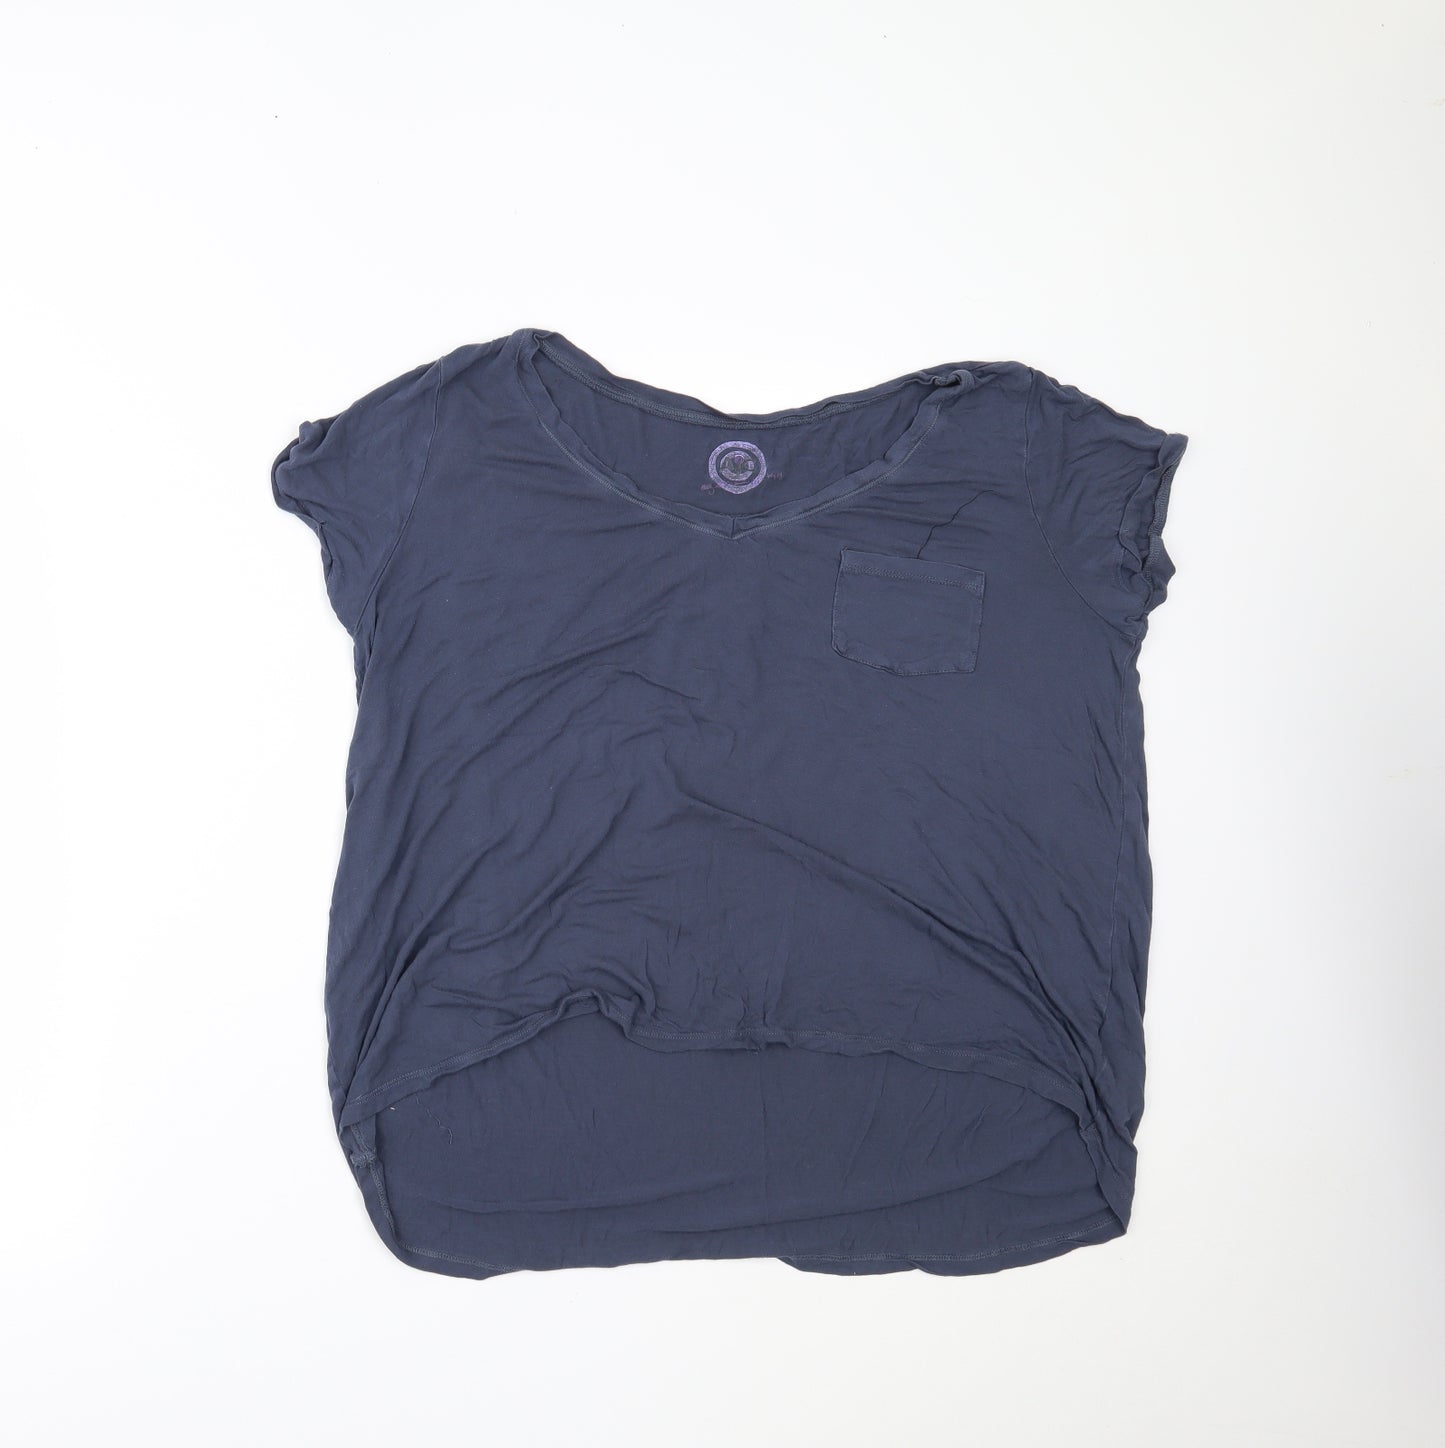 AJC Womens Blue   Basic T-Shirt Size 20